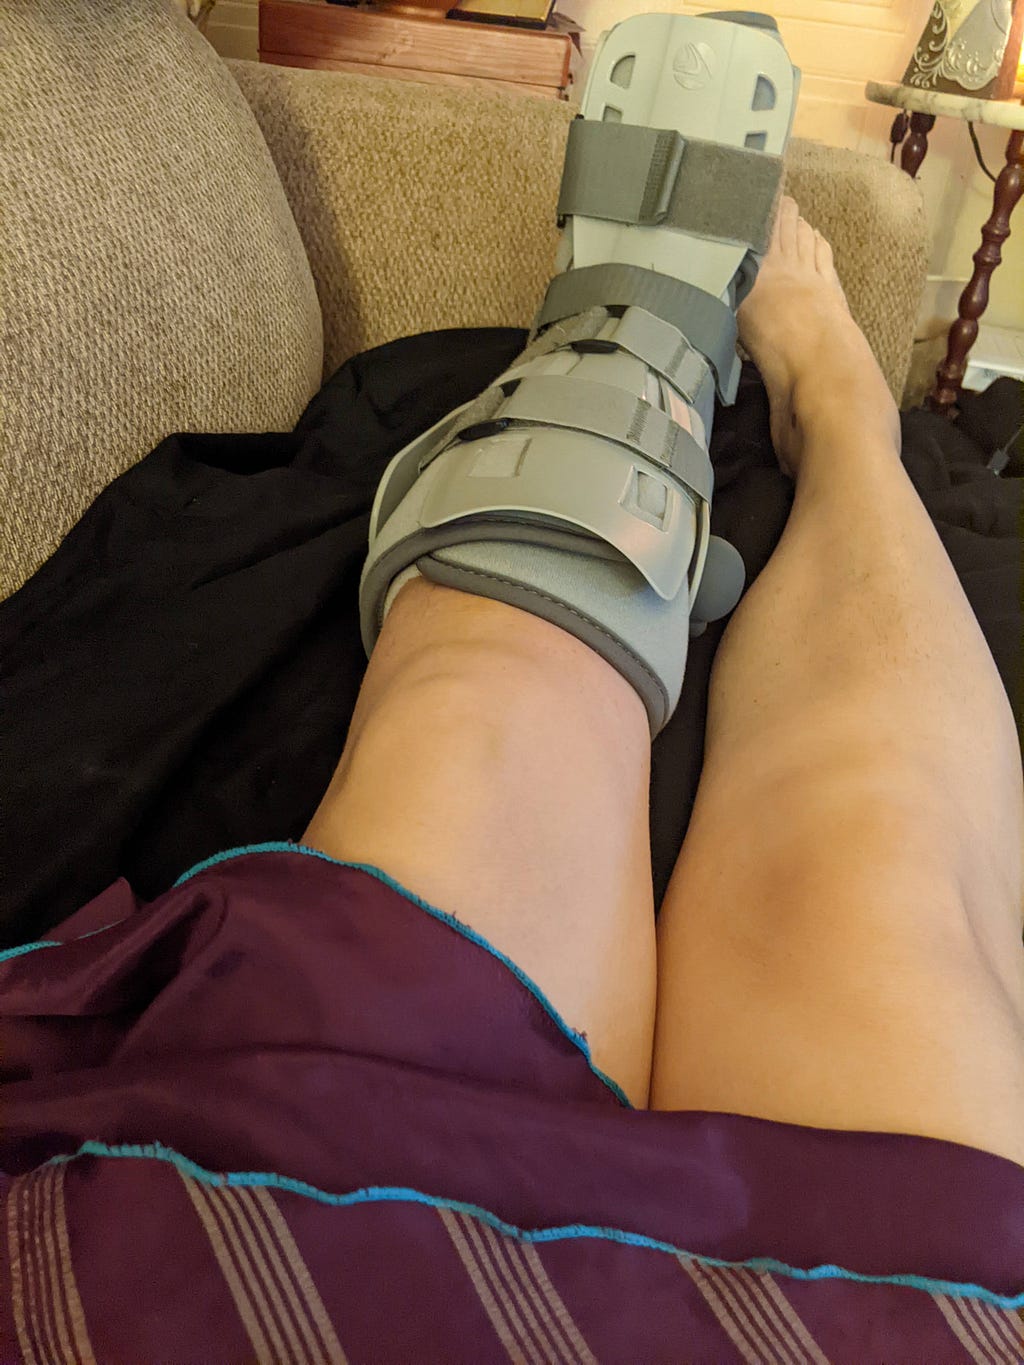 Broken leg in boot — Liz Harrison